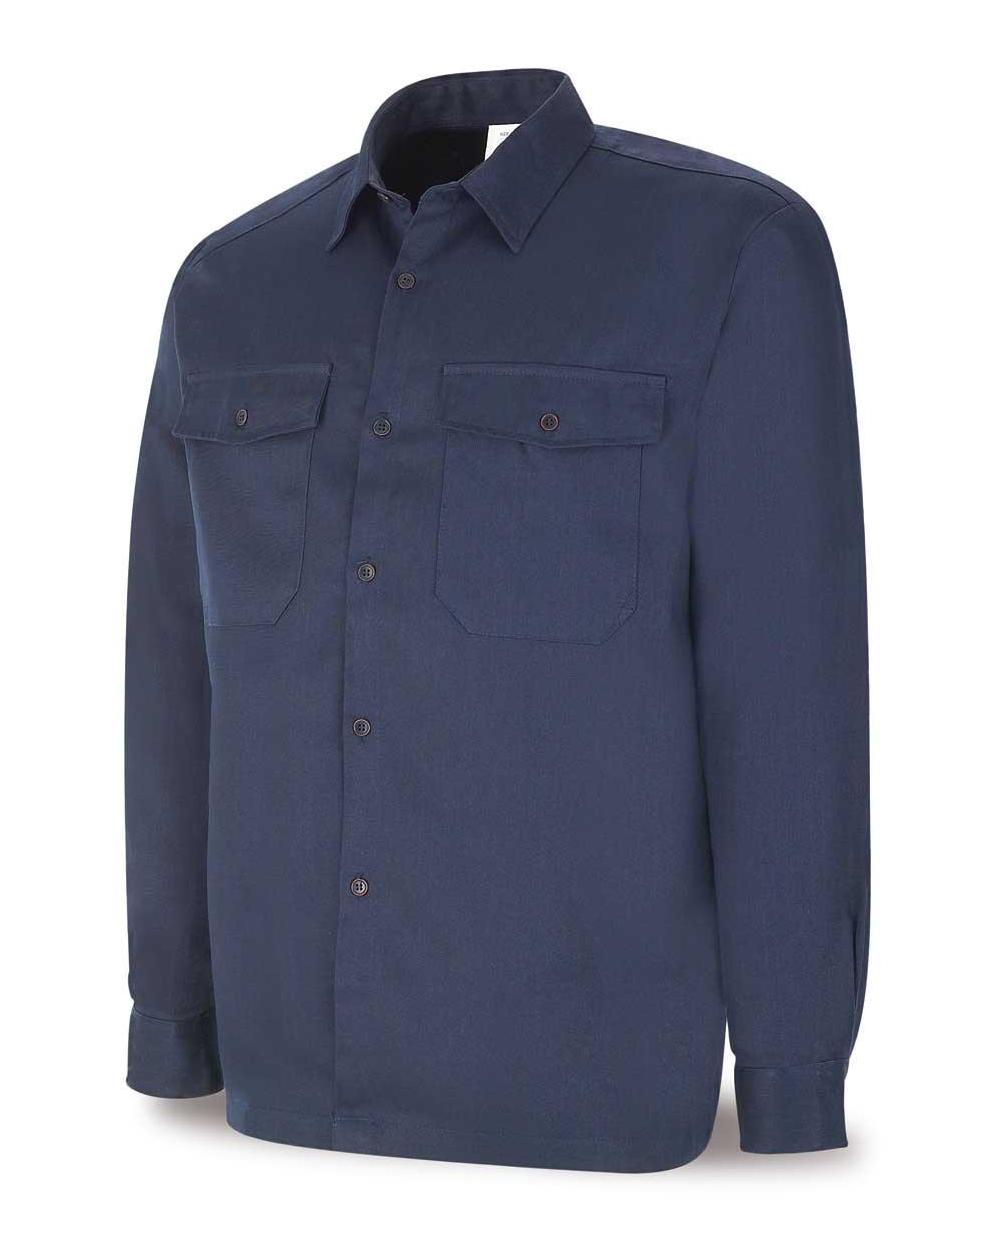 Comprar Camisa Ignífuga Antiestática Azul 988-Caia/N barato